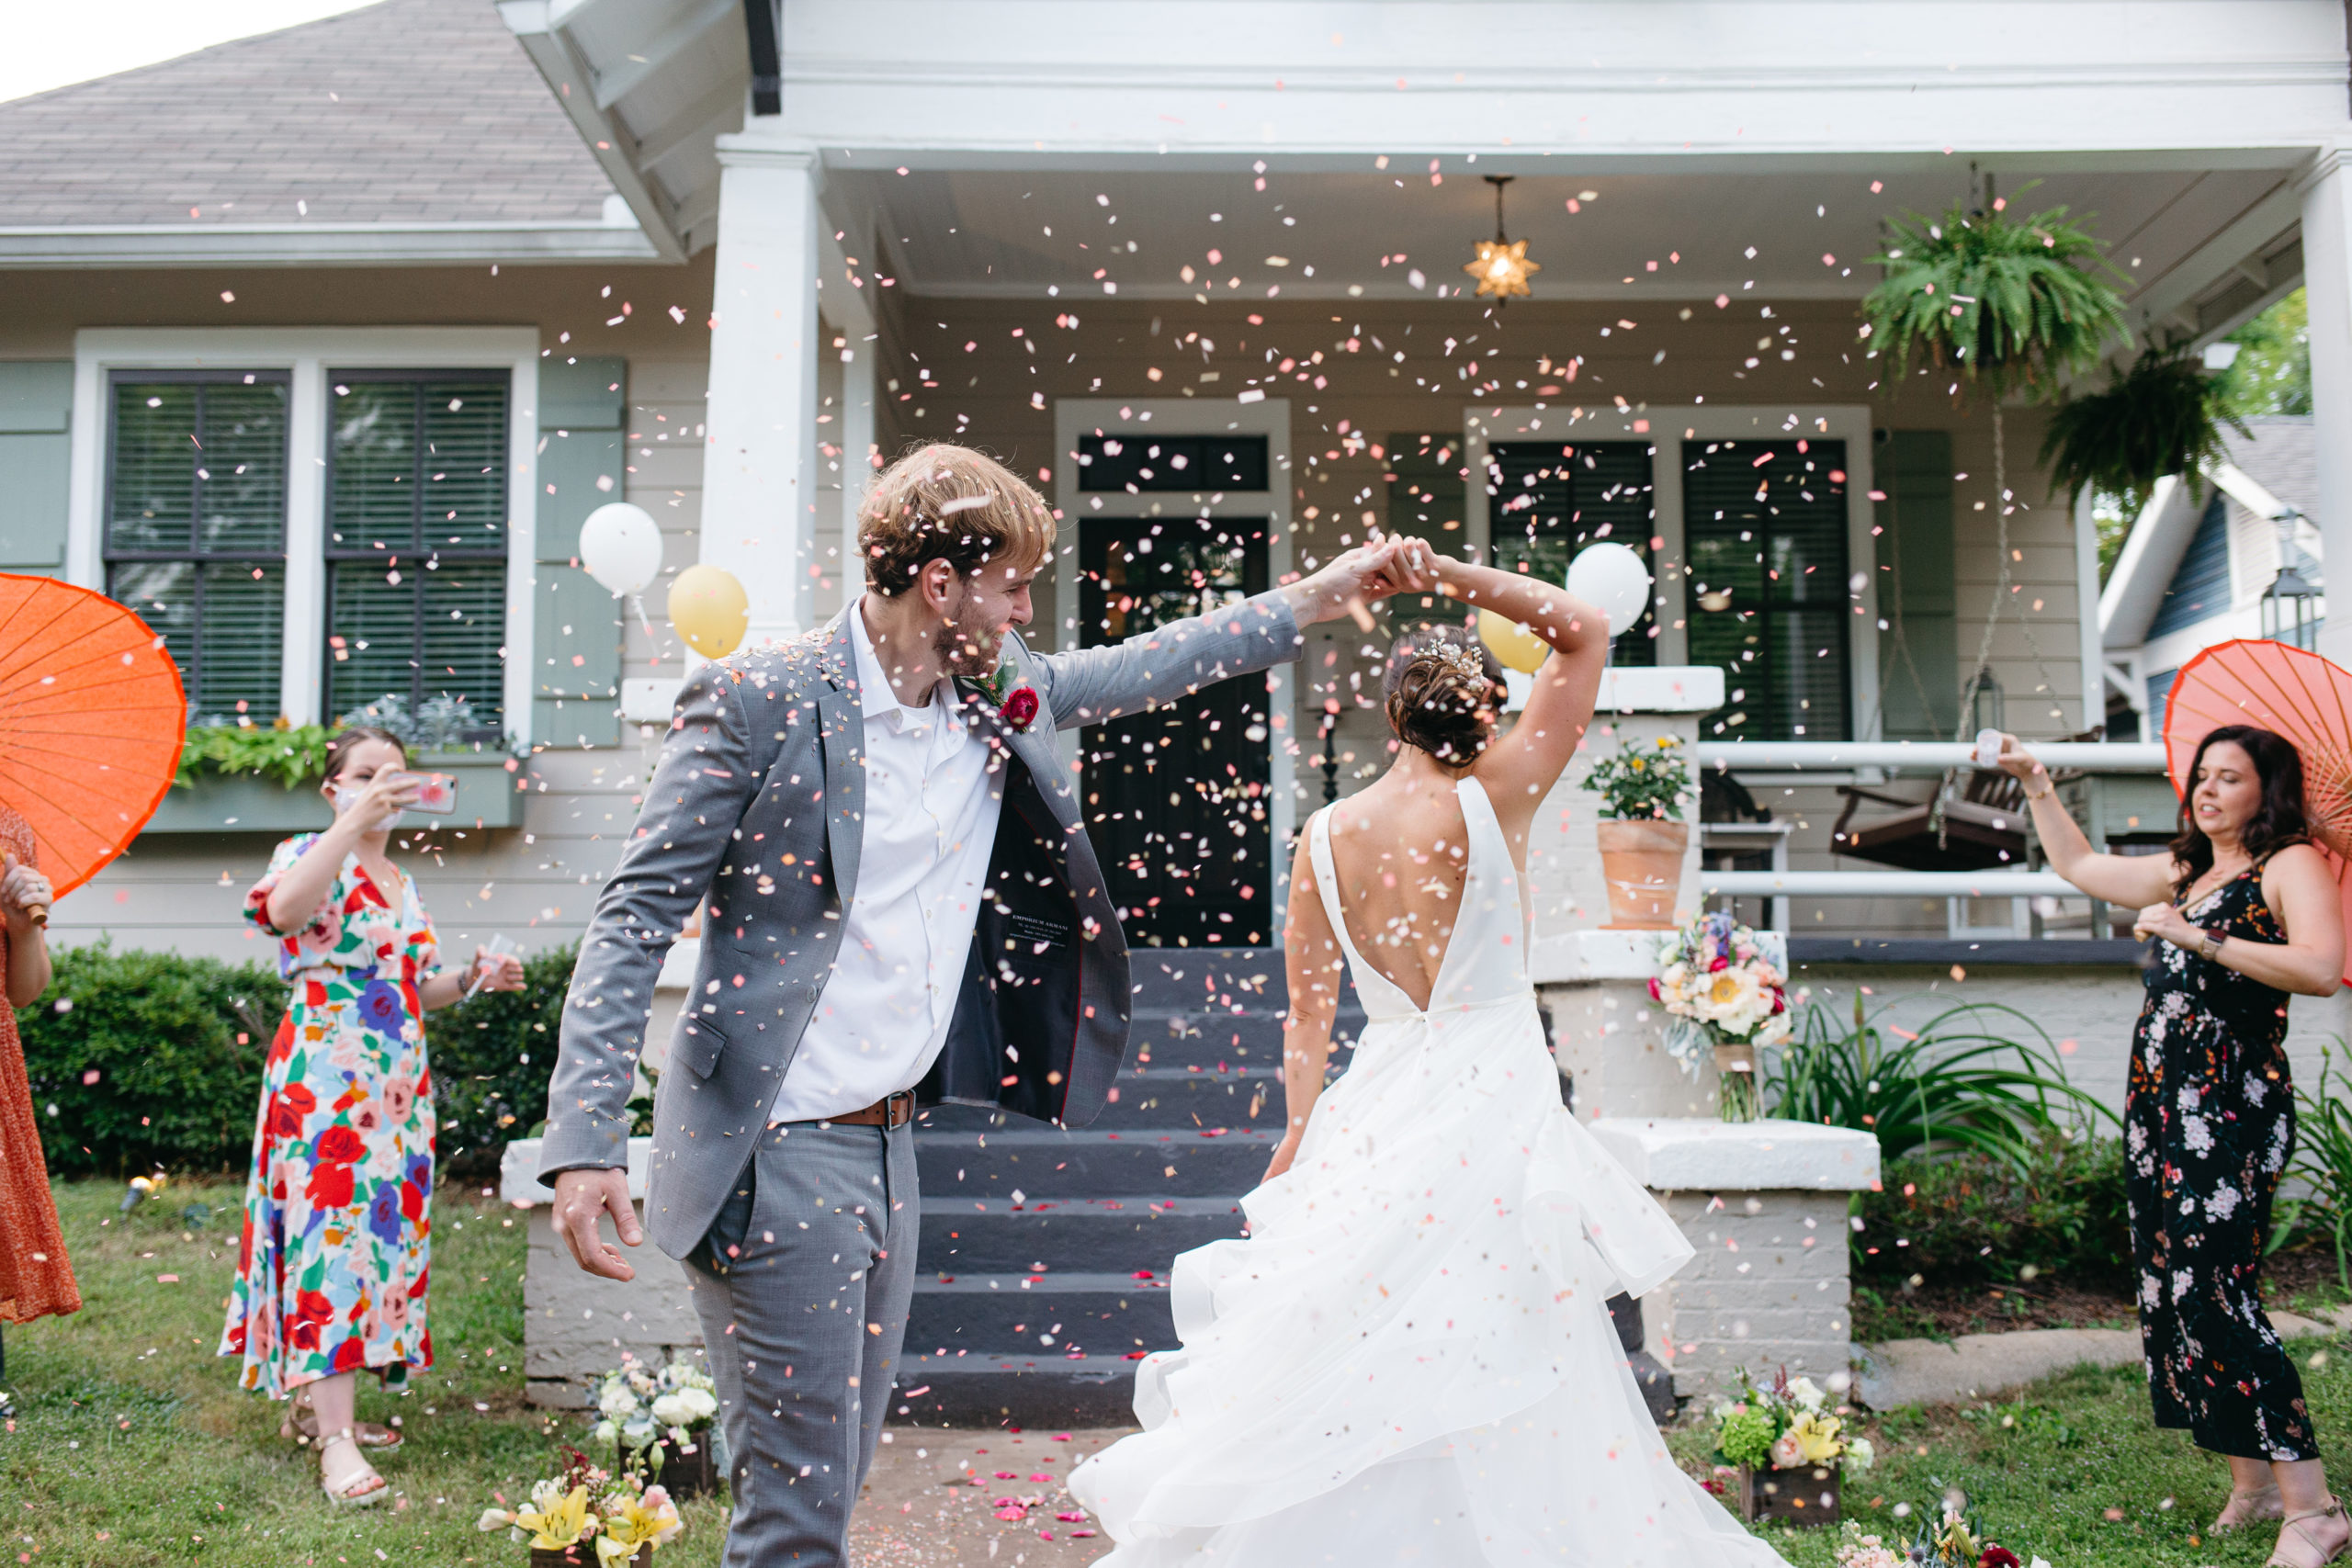 Biodegradable confetti exit ideas for eco-friendly wedding 